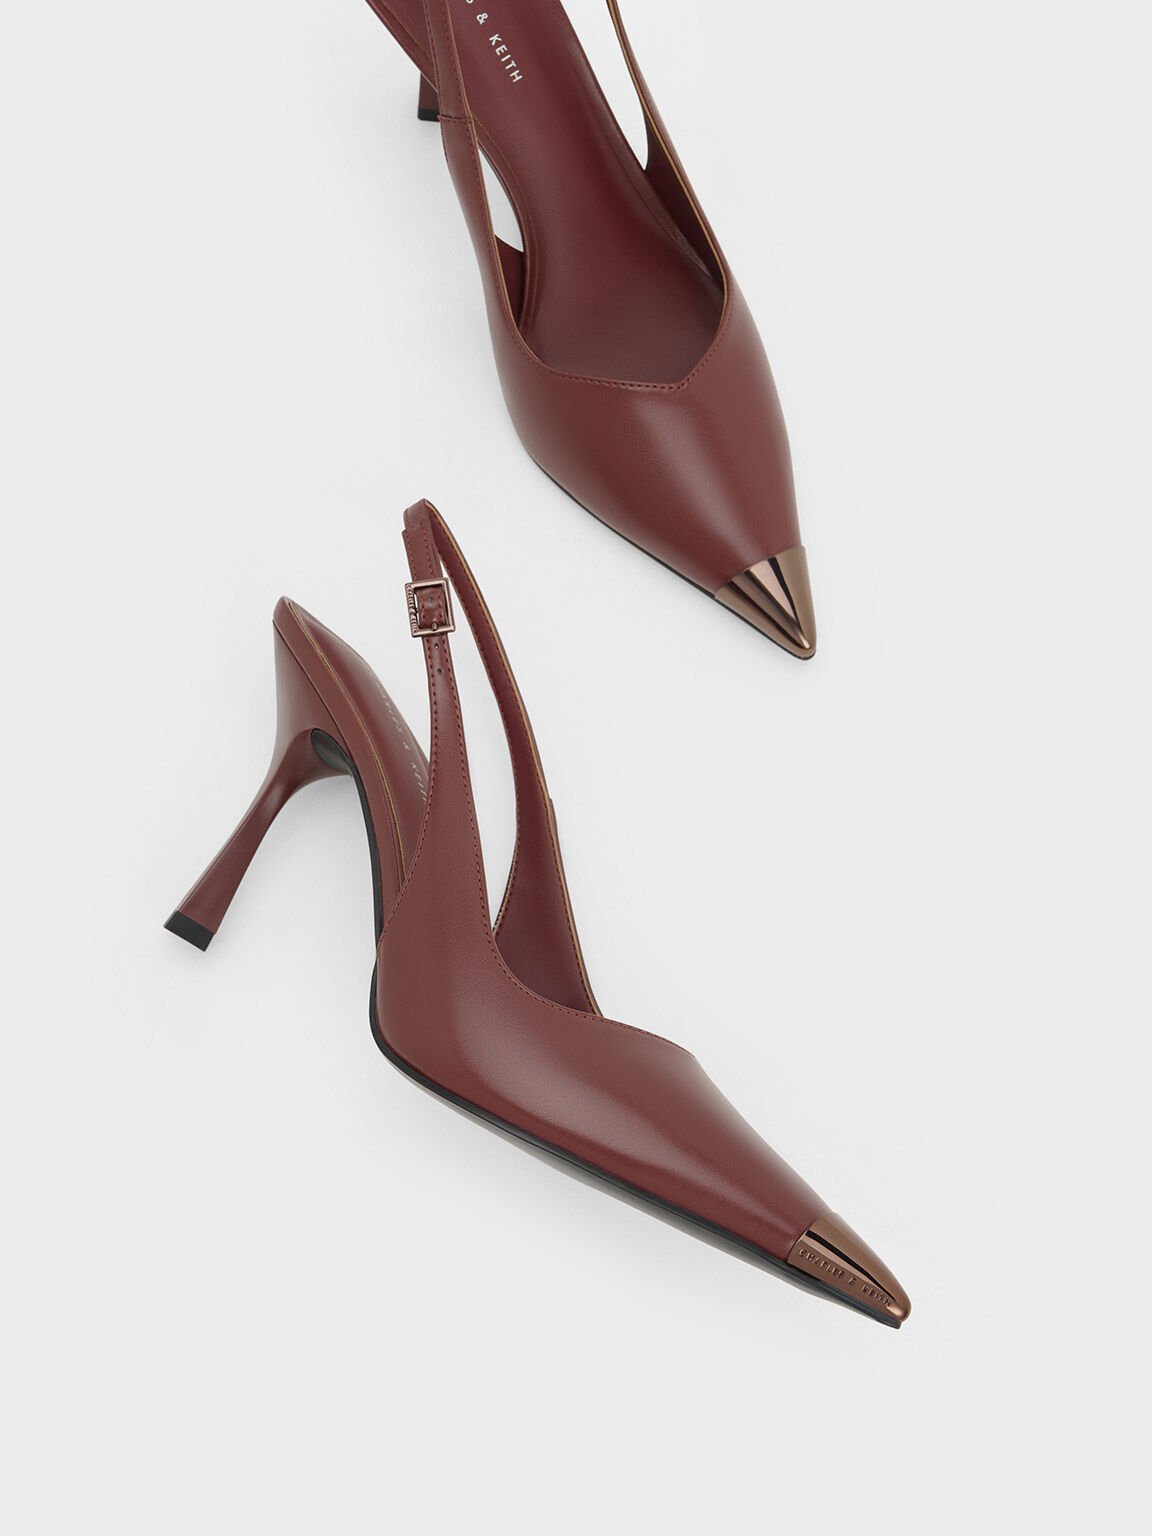 PRADA Italy Suede Leather Buckle Heels Shoes Sz 41 Red Maroon Bordeaux |  eBay